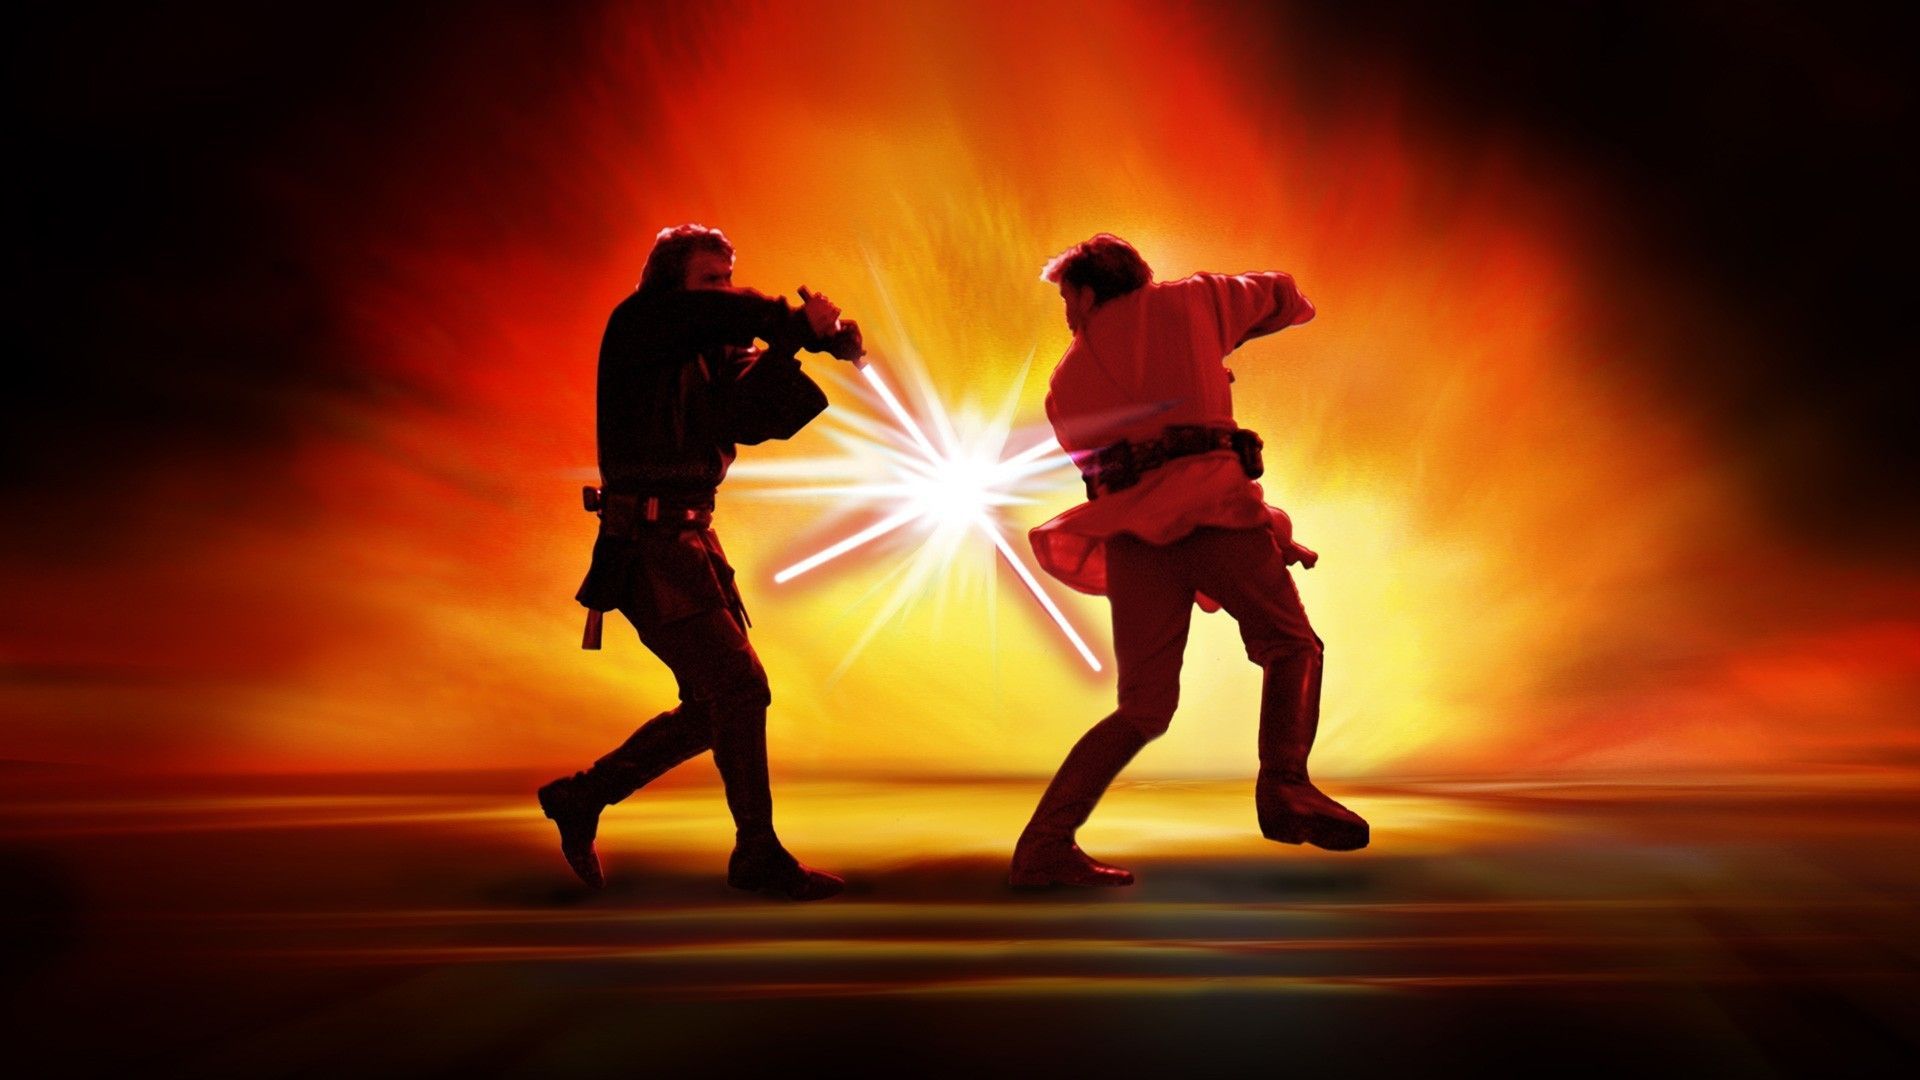 Obi Wan Kenobi Vs Anakin Skywalker Desktop Wallpapers - Wallpaper Cave.